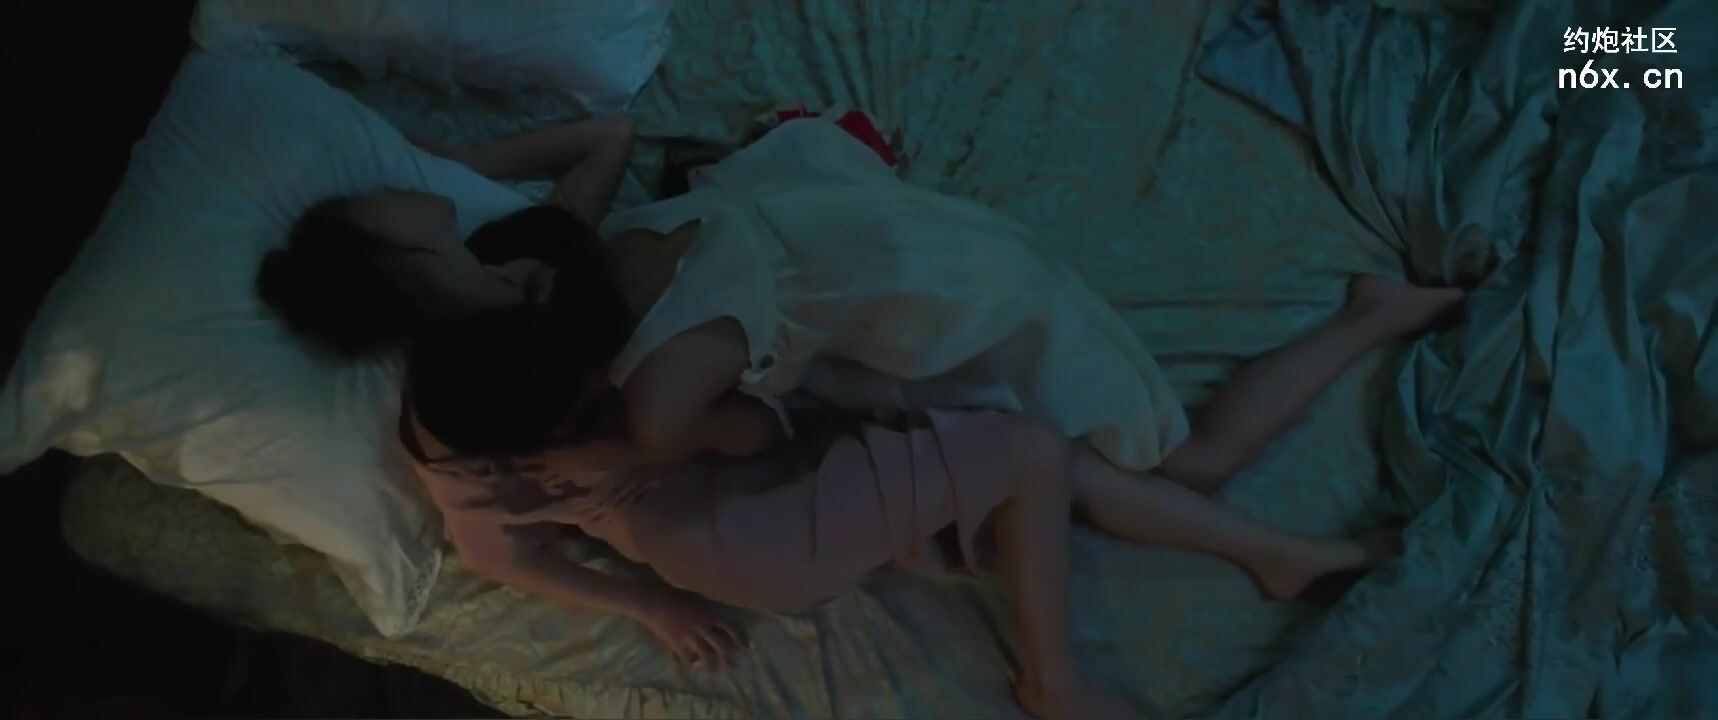 Dick Sucking Korean movie smokin' hot Asians nude make it in a lesbian way in the night Teenporn - 1